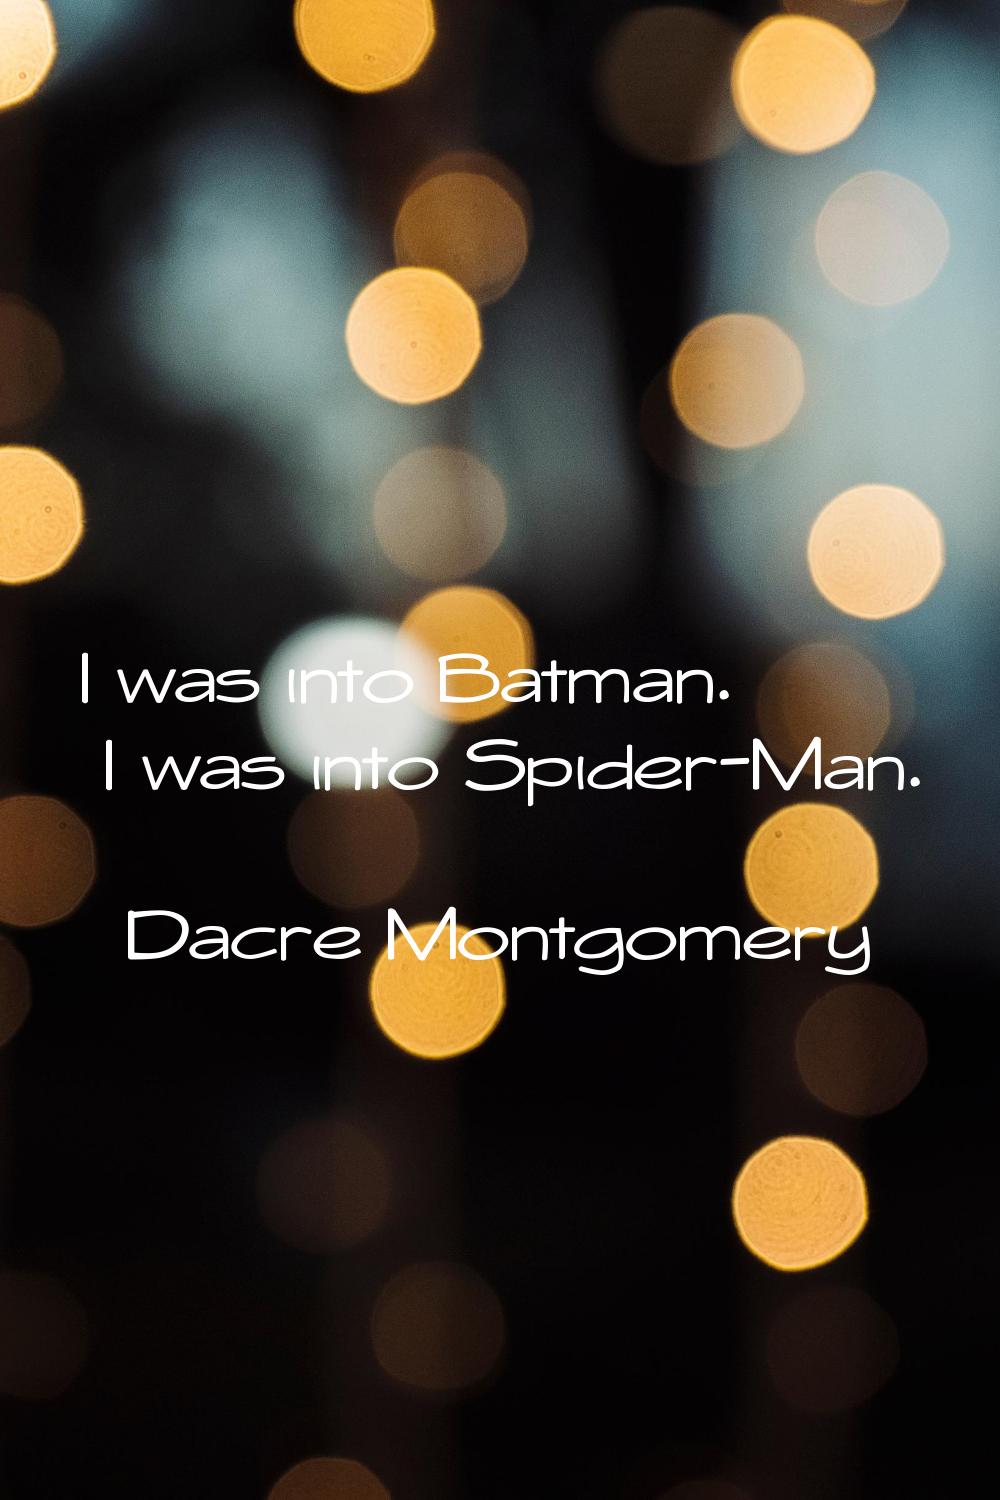 I was into Batman. I was into Spider-Man.